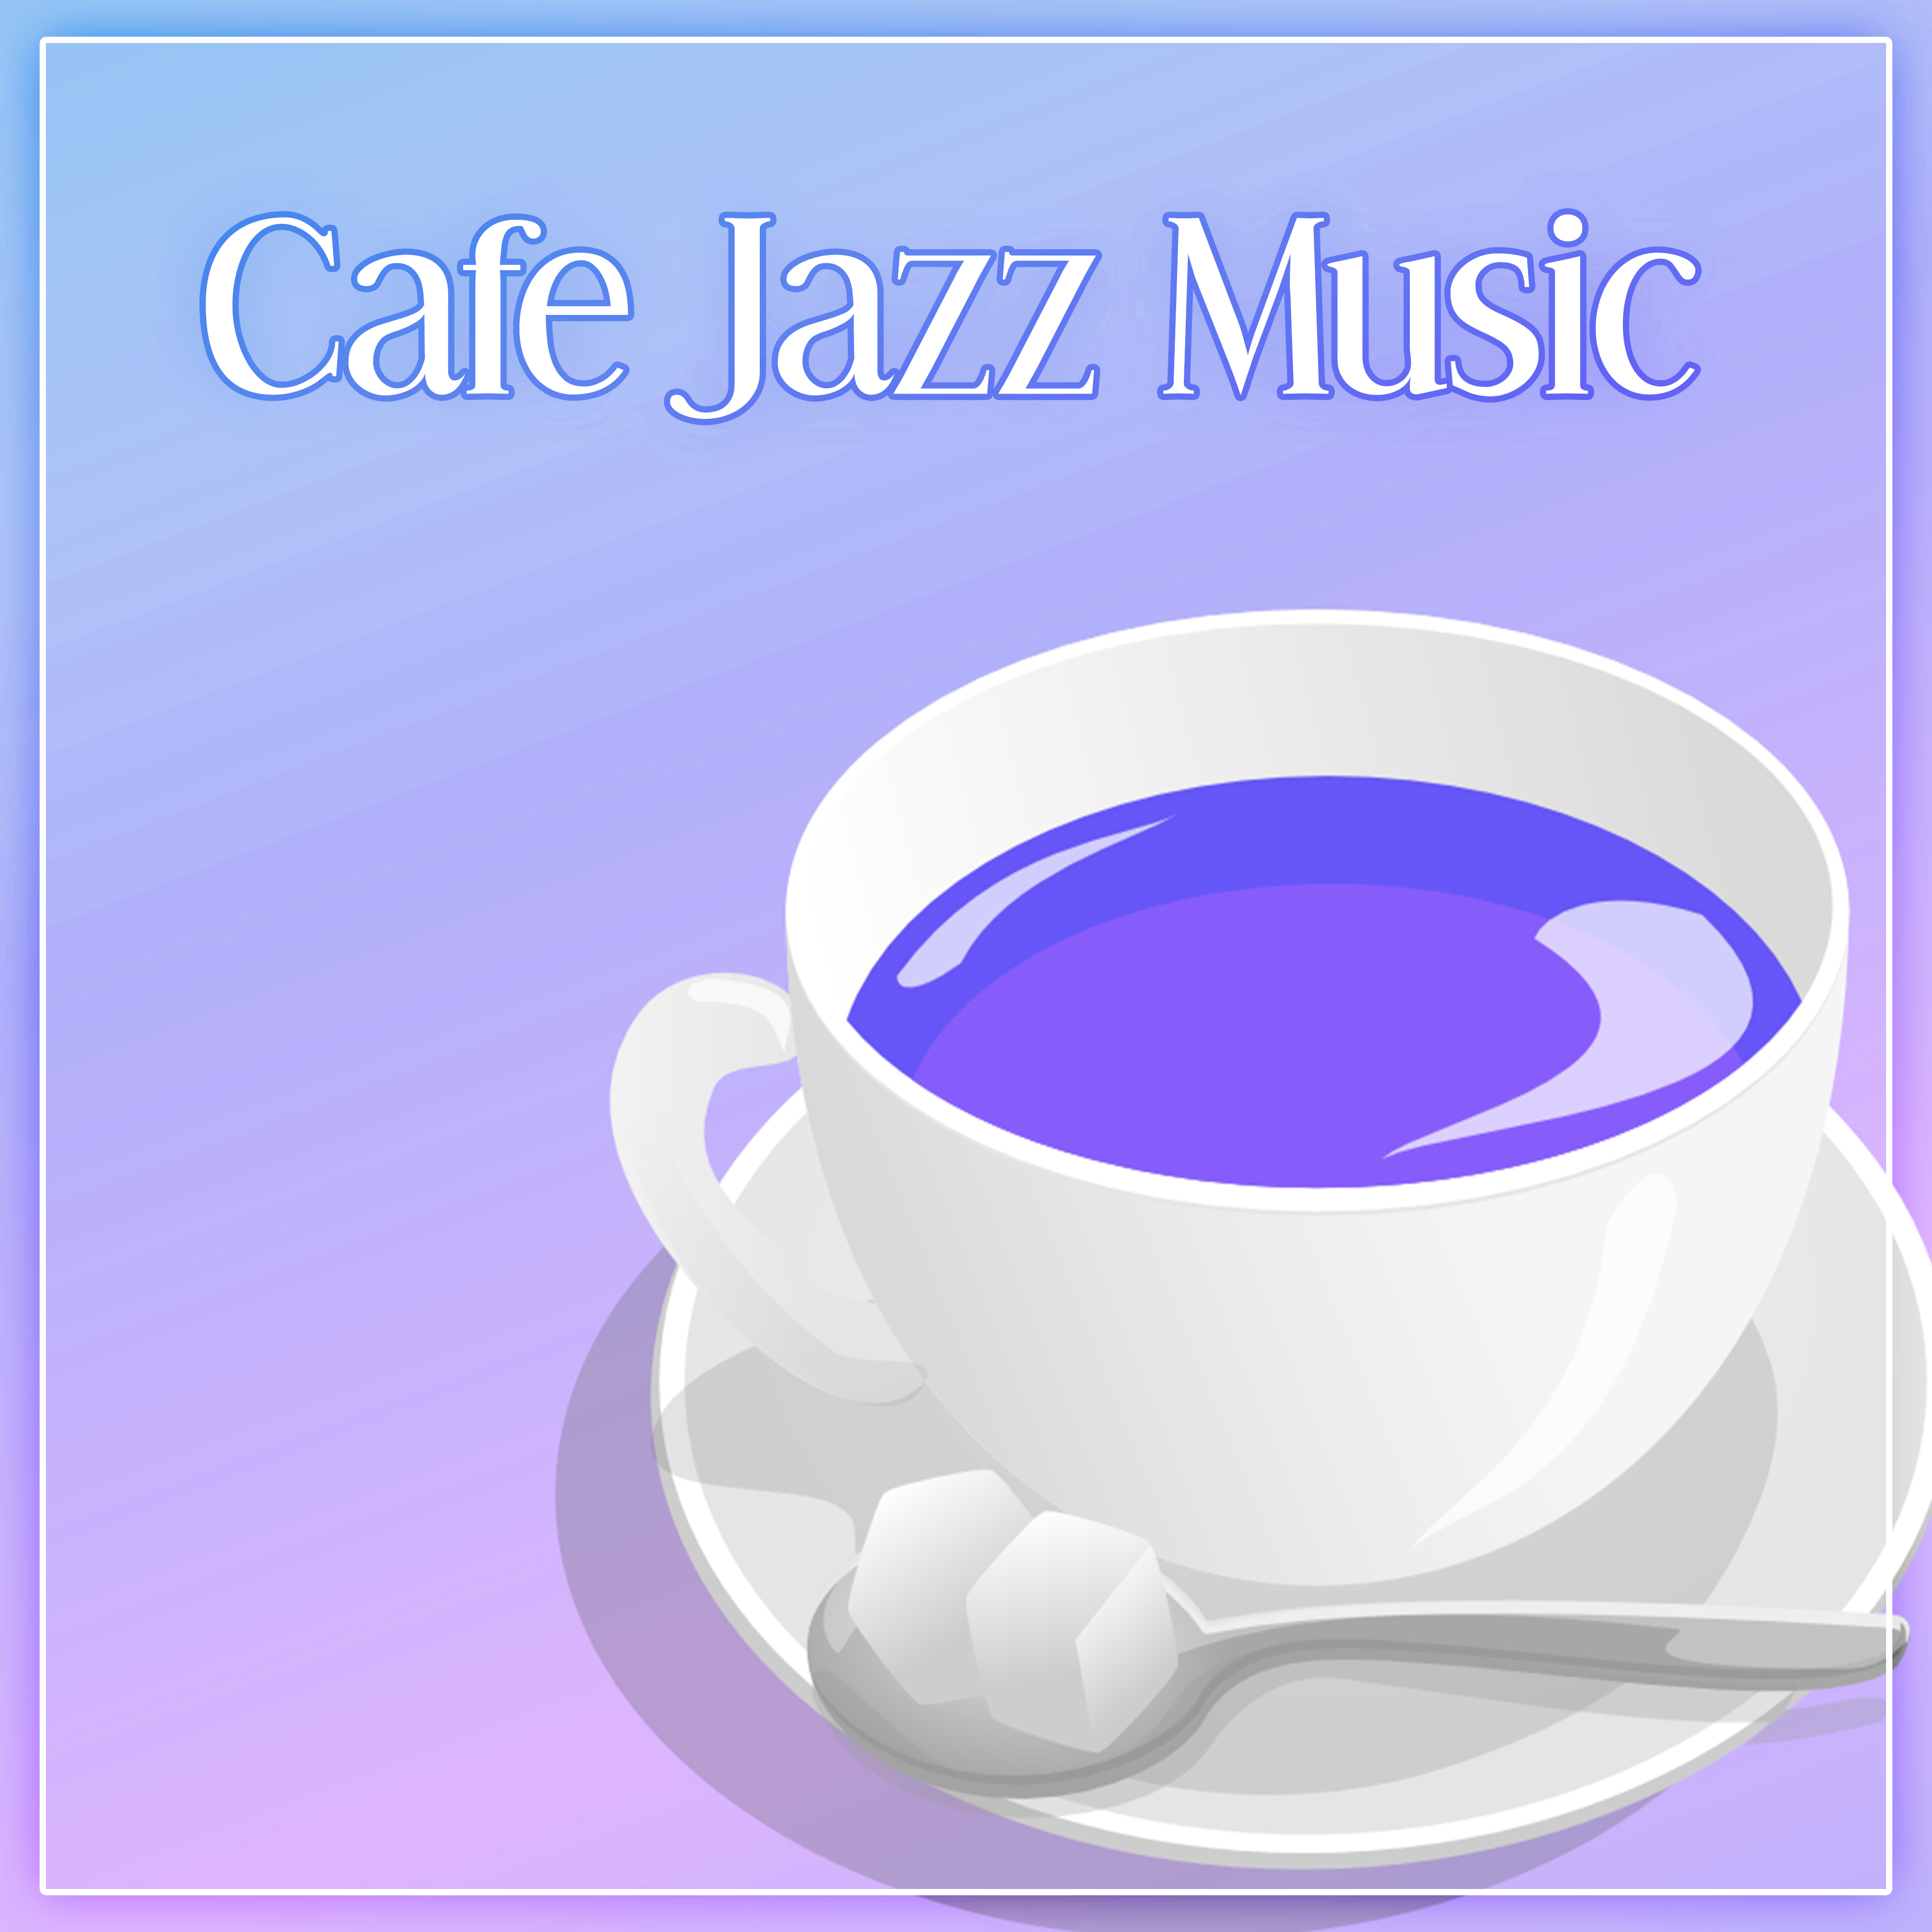 Cafe Jazz Music  Slow Awakeining with Jazz Sounds, Beautiful Background Music for Coffee Time, Smooth Jazz, Instrumental Piano, Jazz Day  Night